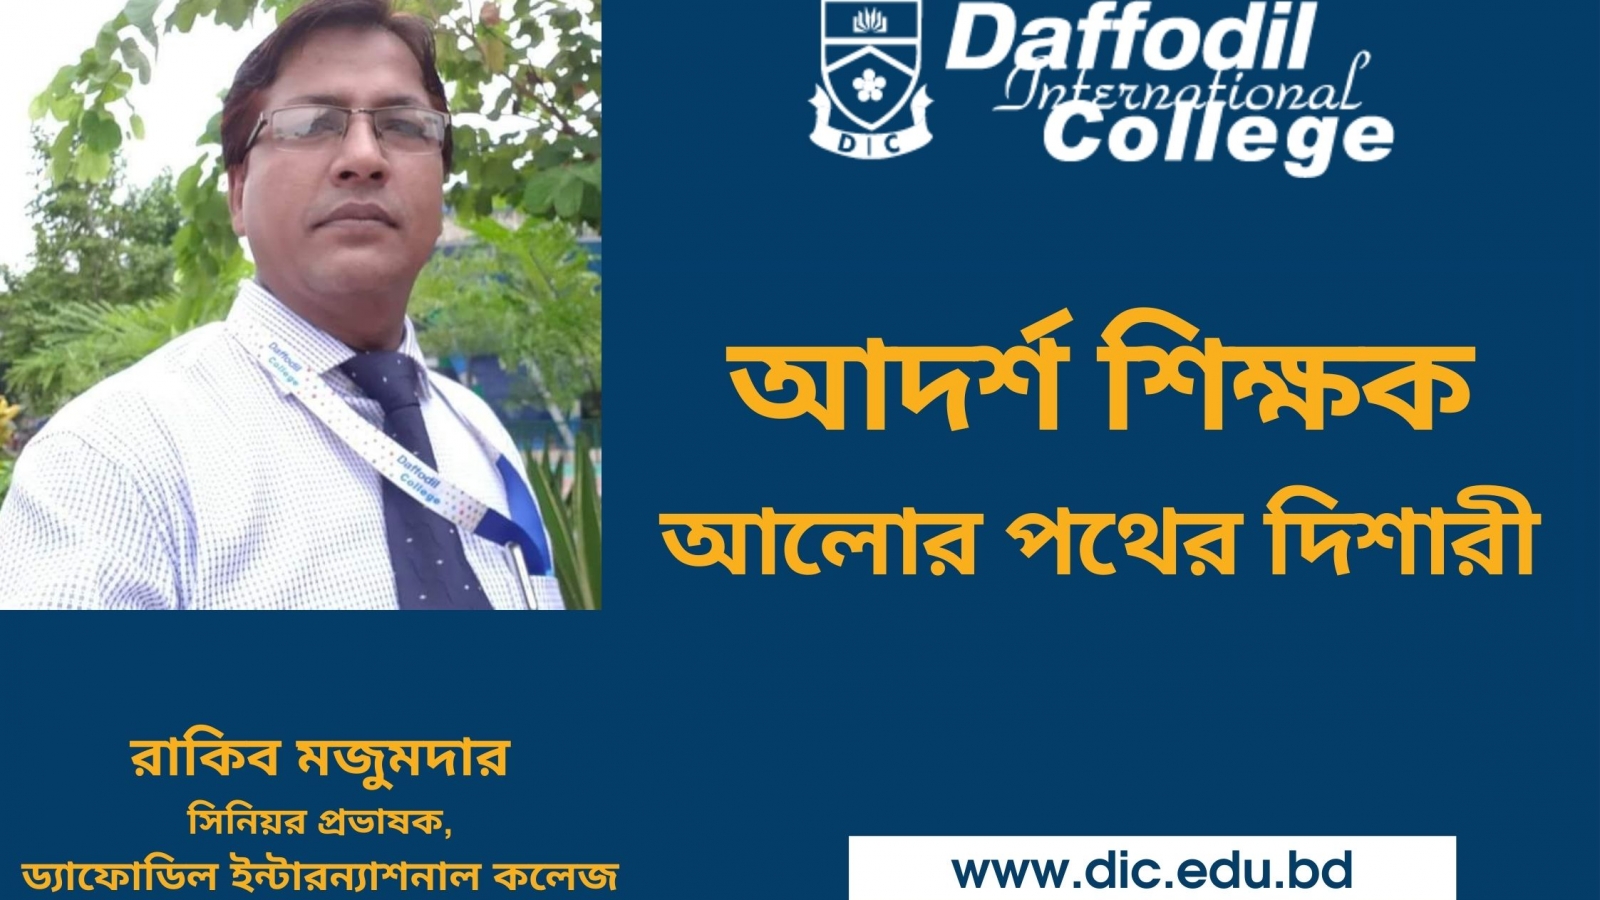 Daffodil International College Teachers Blog by rakib Mojumder (MH) Sir